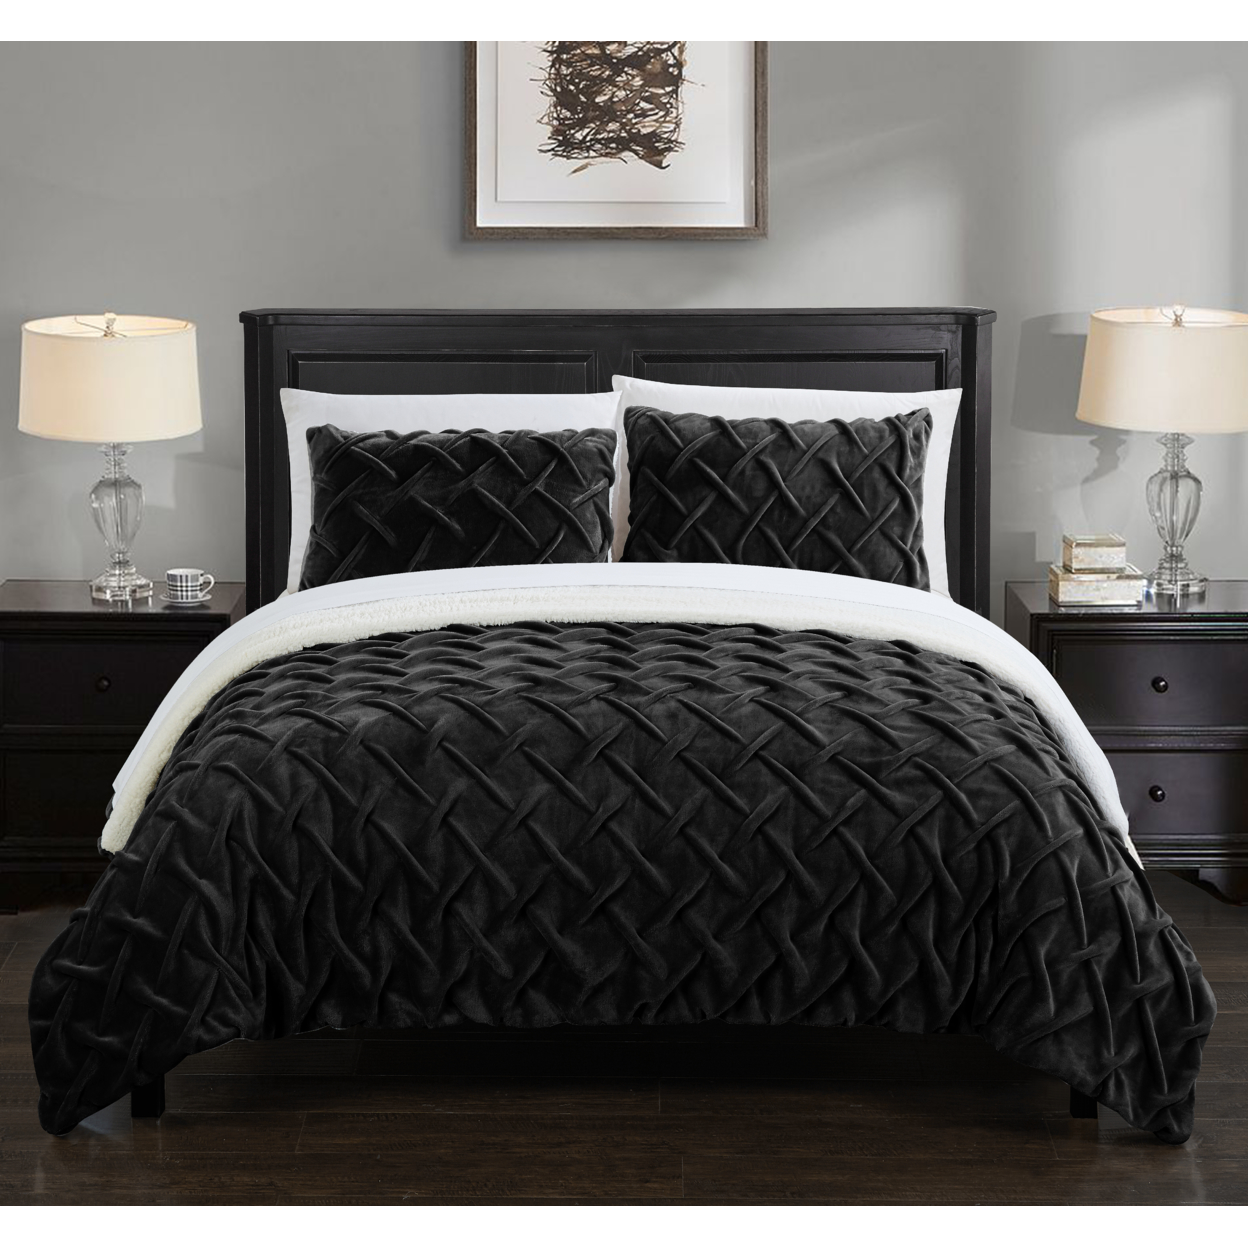 Thirsa 3 Or 2 Piece Comforter Set Ultra Plush Micro Mink Criss Cross Pinch Pleat Sherpa Lined Bedding - Black, King